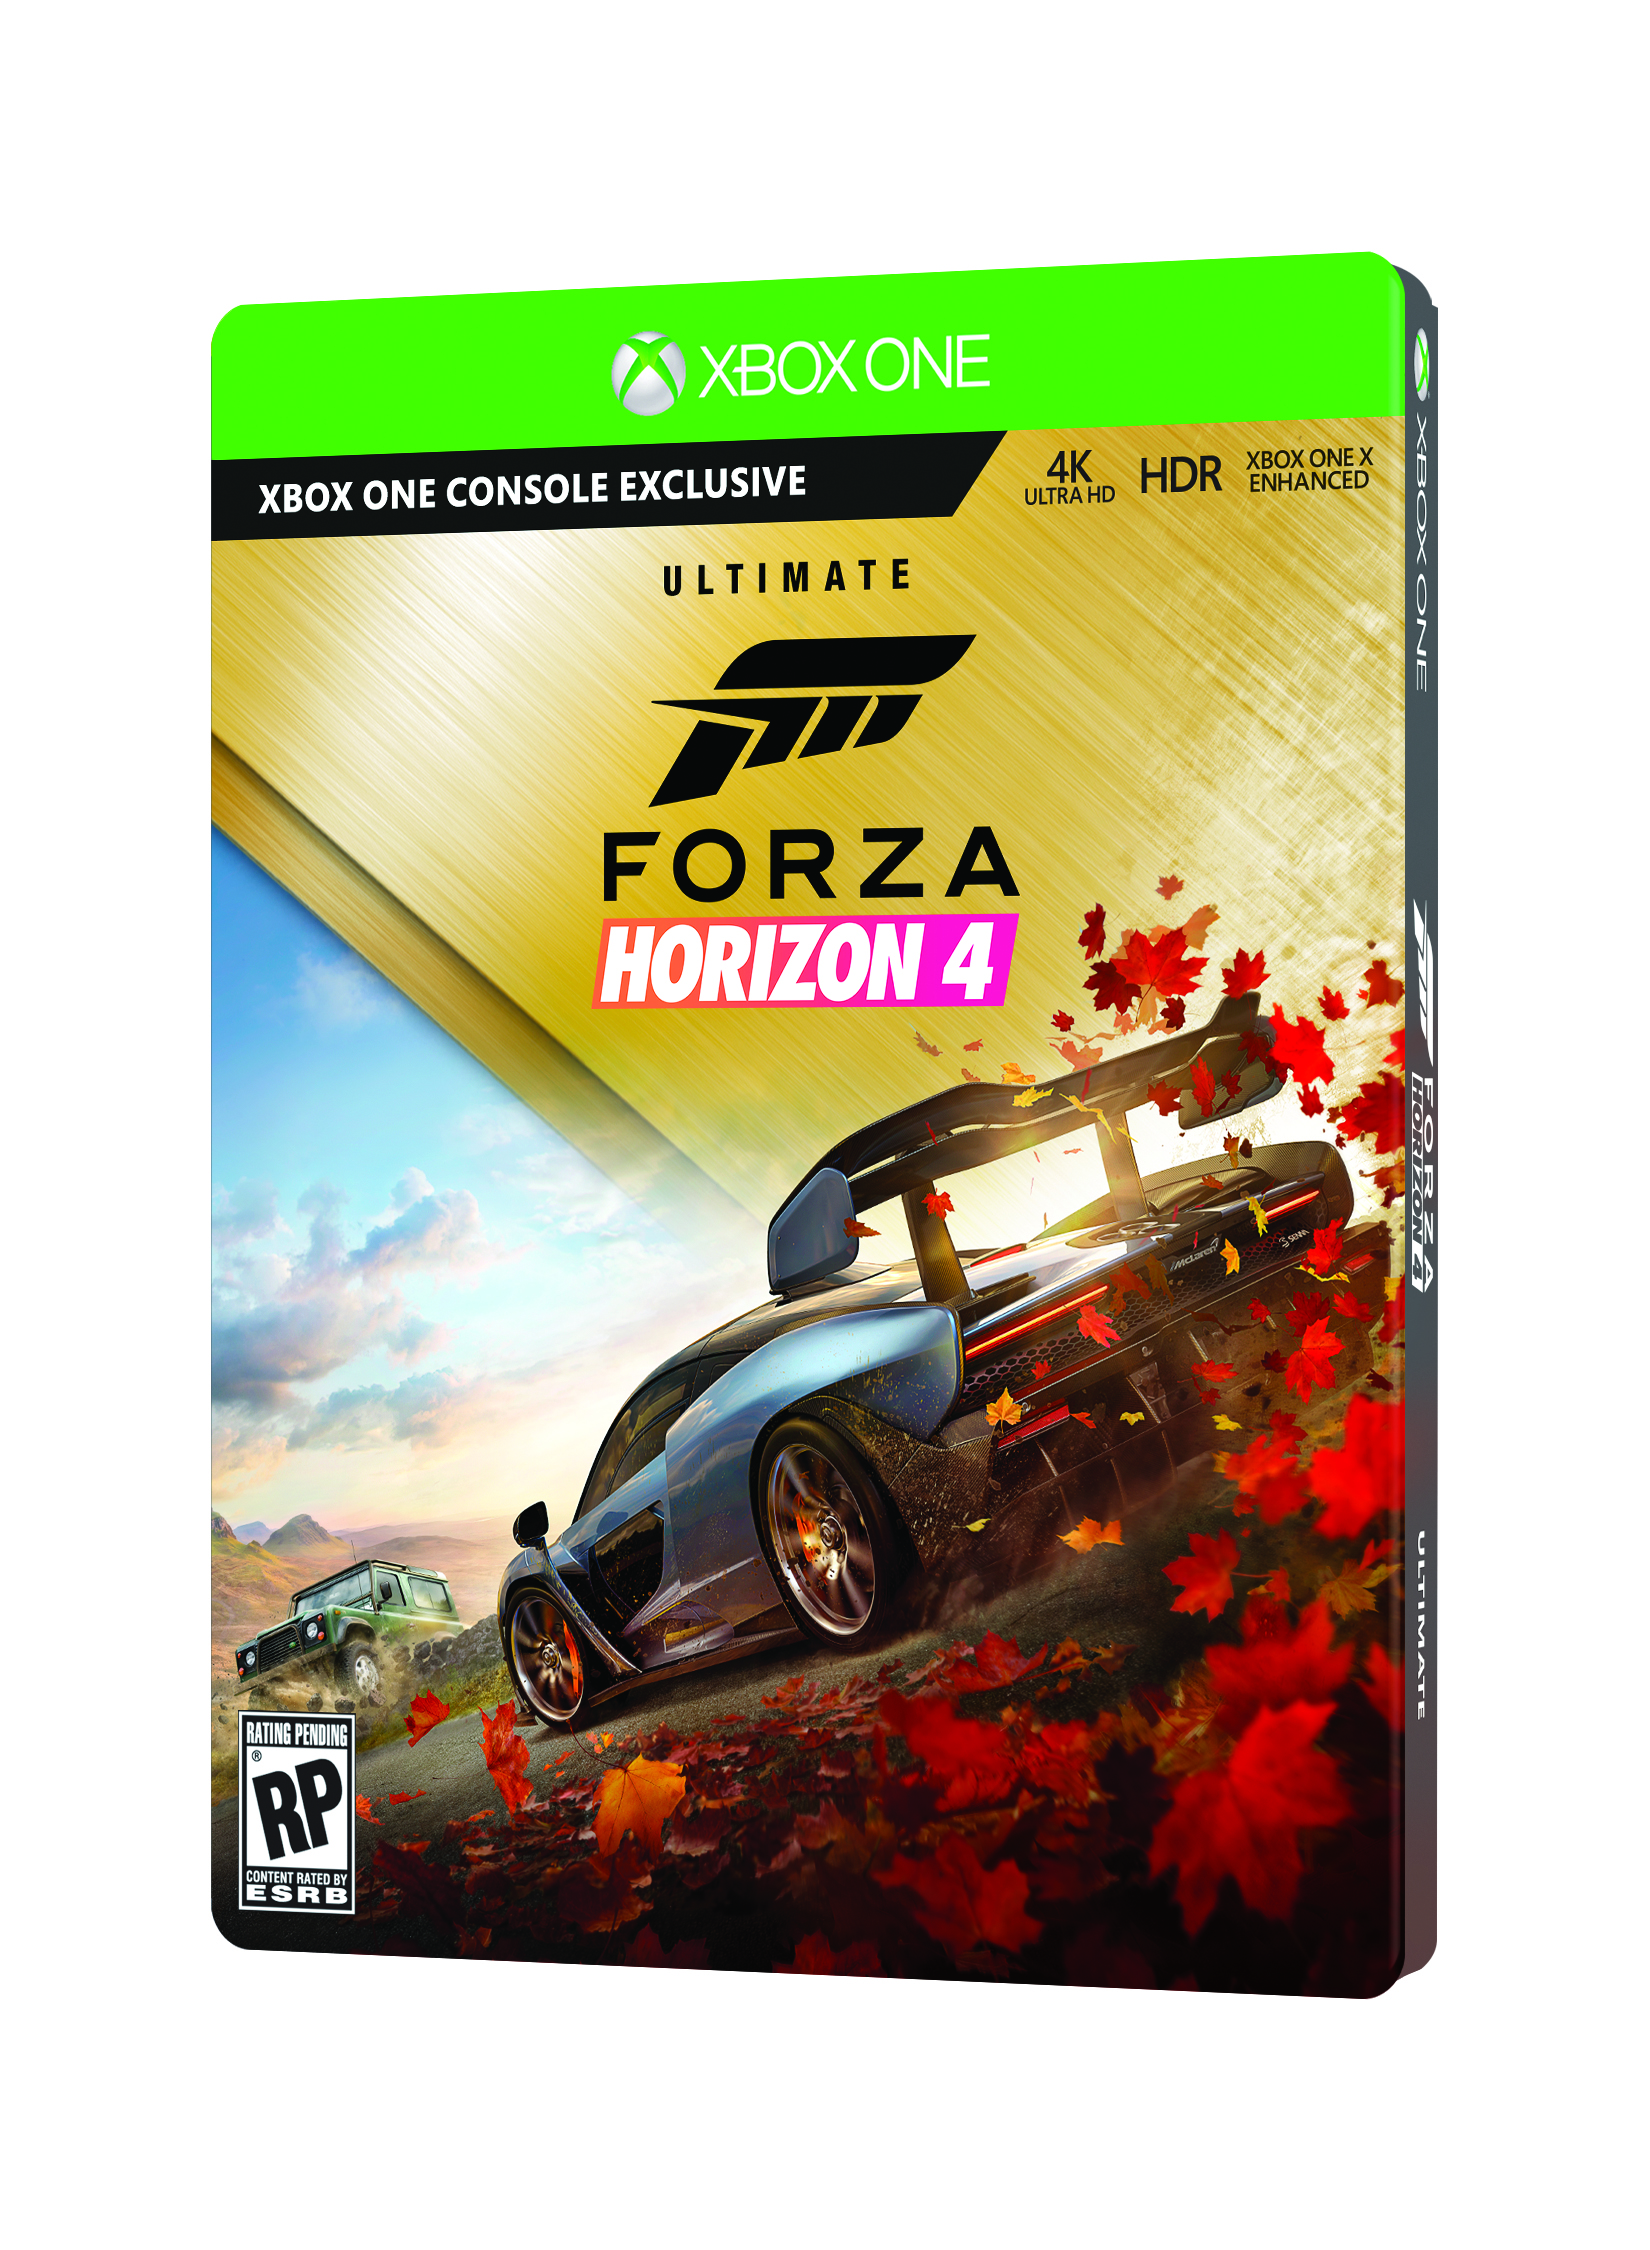 Forza Horizon 4 Ultimate Right Box CMYK